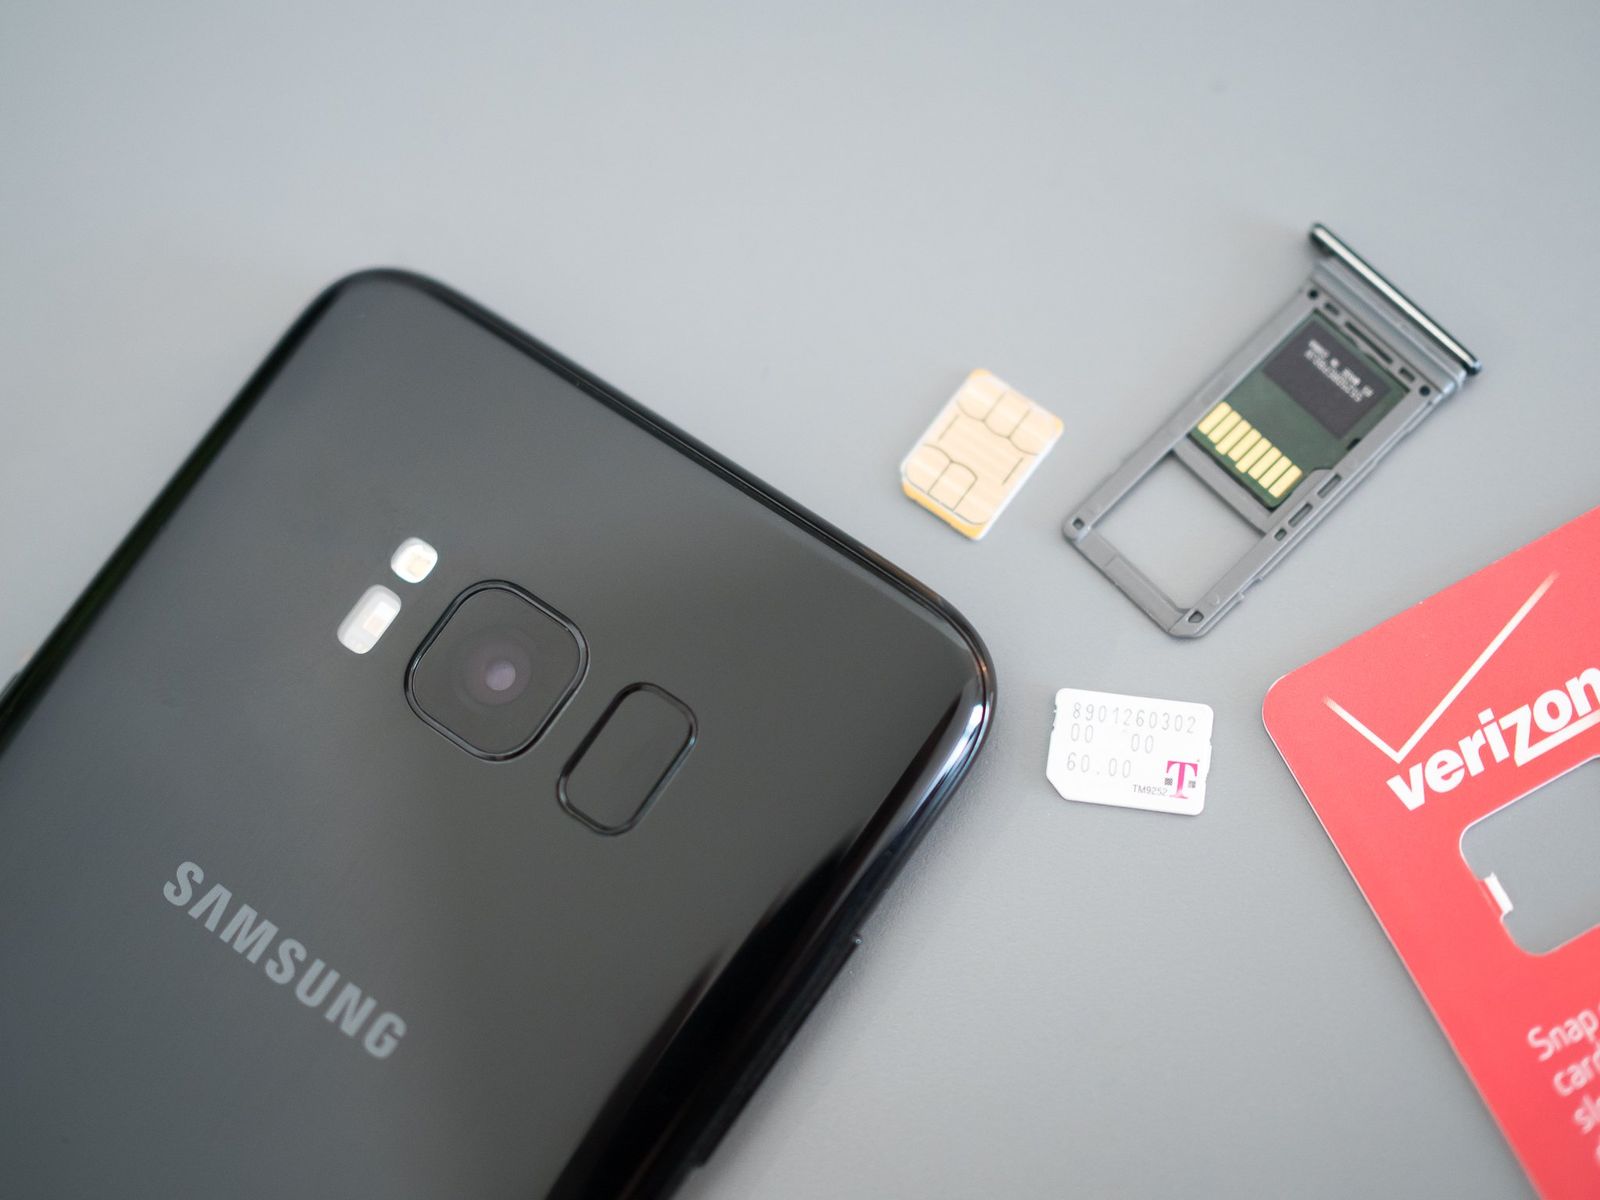 Galaxy S8 with SIM cards